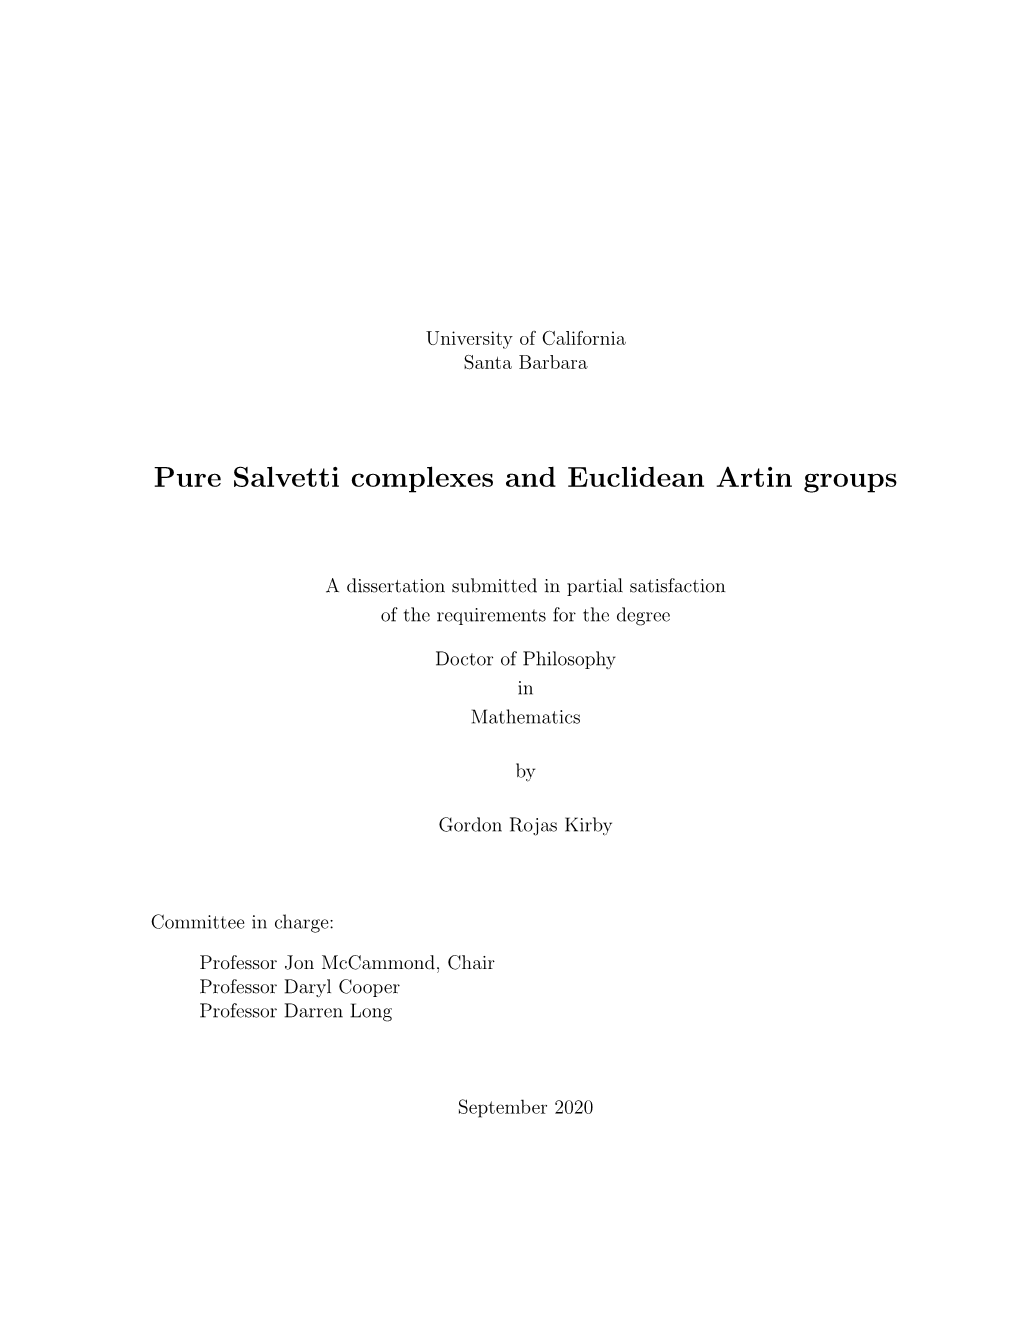 Pure Salvetti Complexes and Euclidean Artin Groups